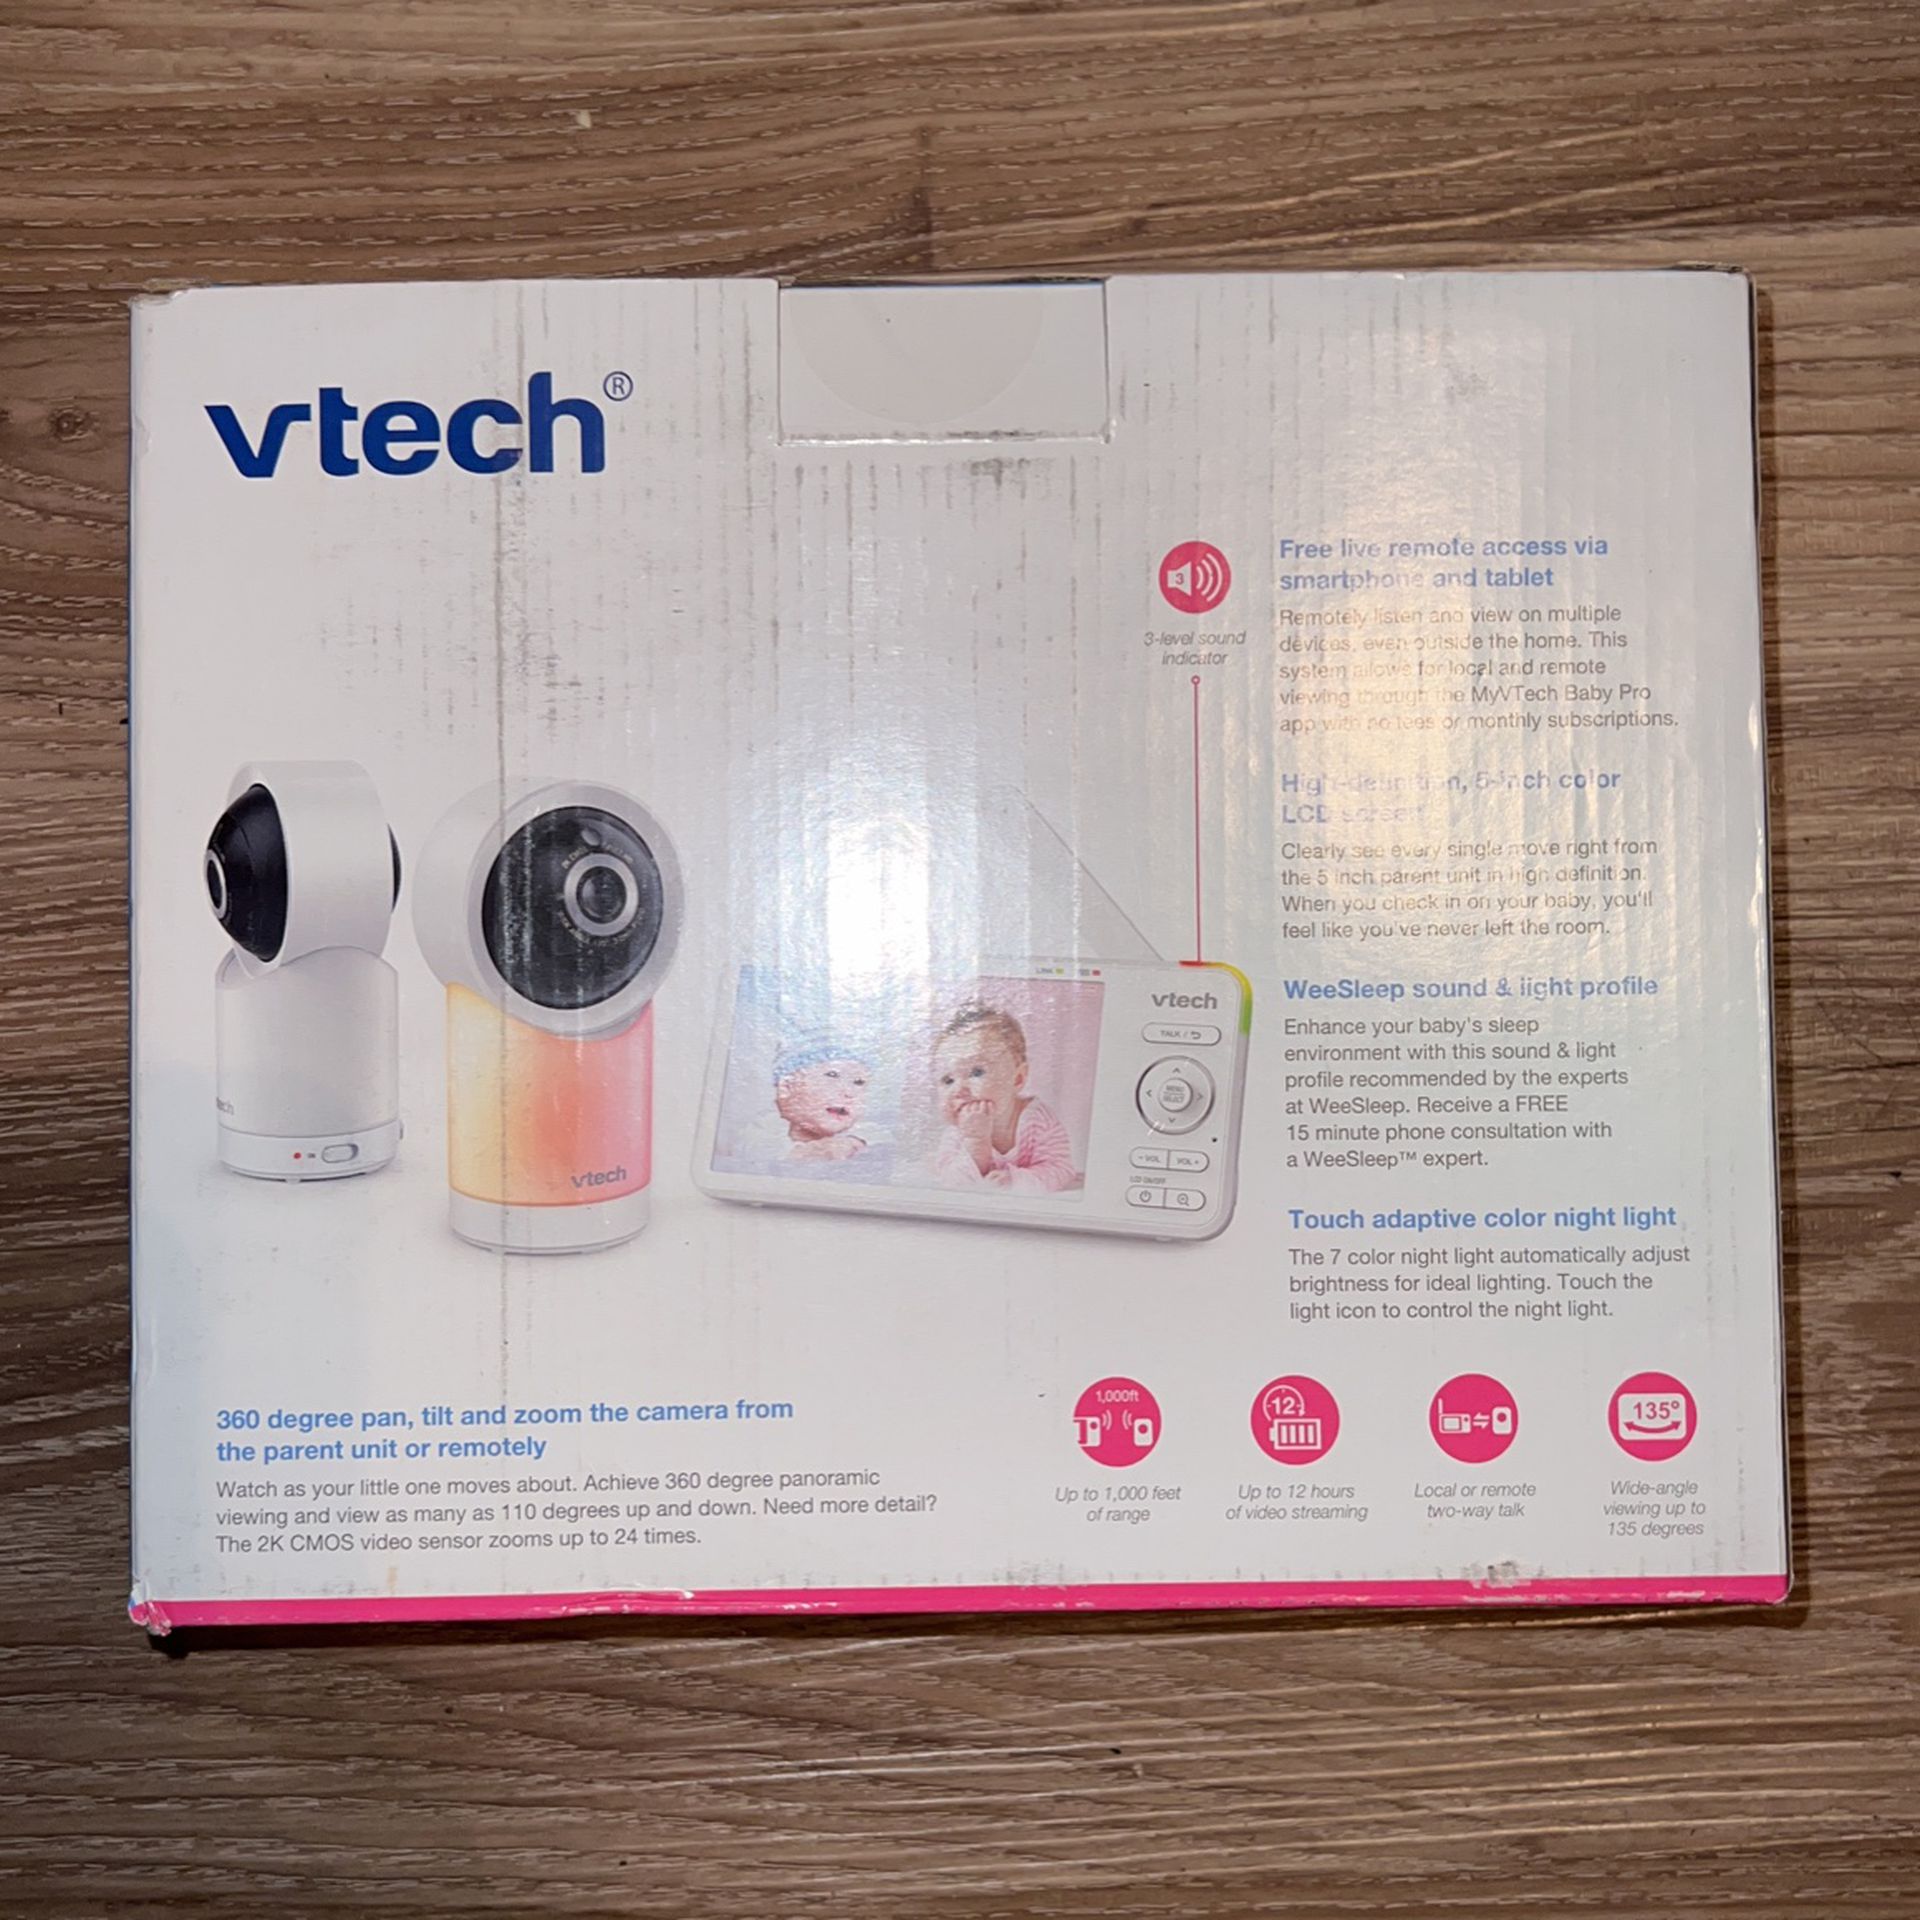 VTech VM991, Wi-Fi Video Baby Monitor, Remote Access, Pan & Tilt Camera 